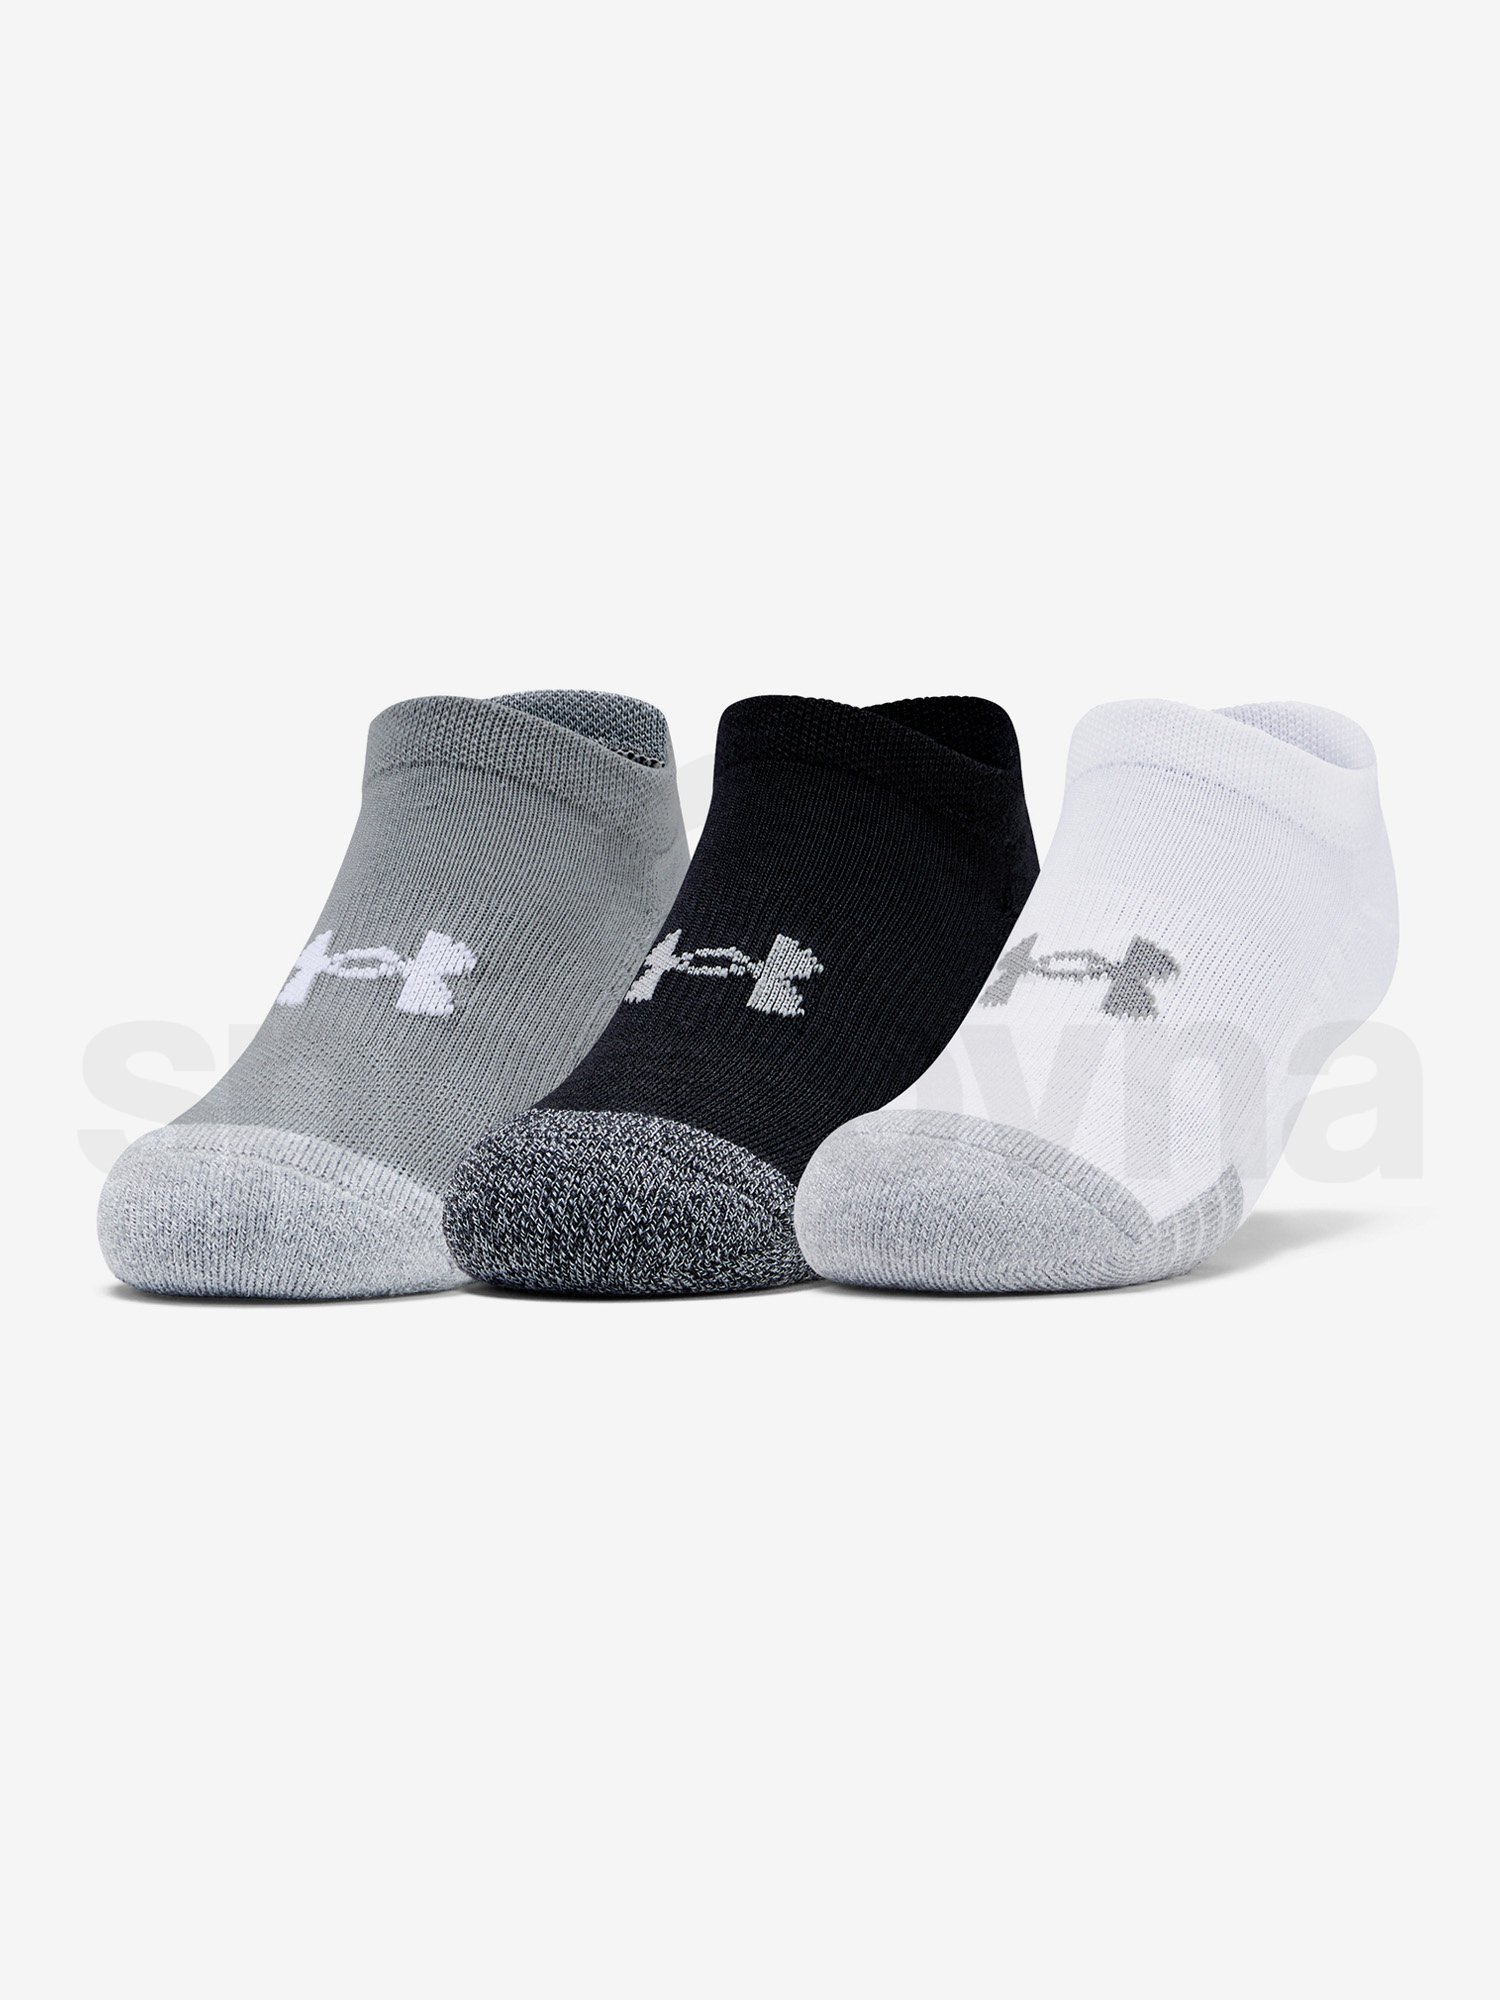 Ponožky Under Armour Youth Heatgear NS J - šedá/černá/bílá